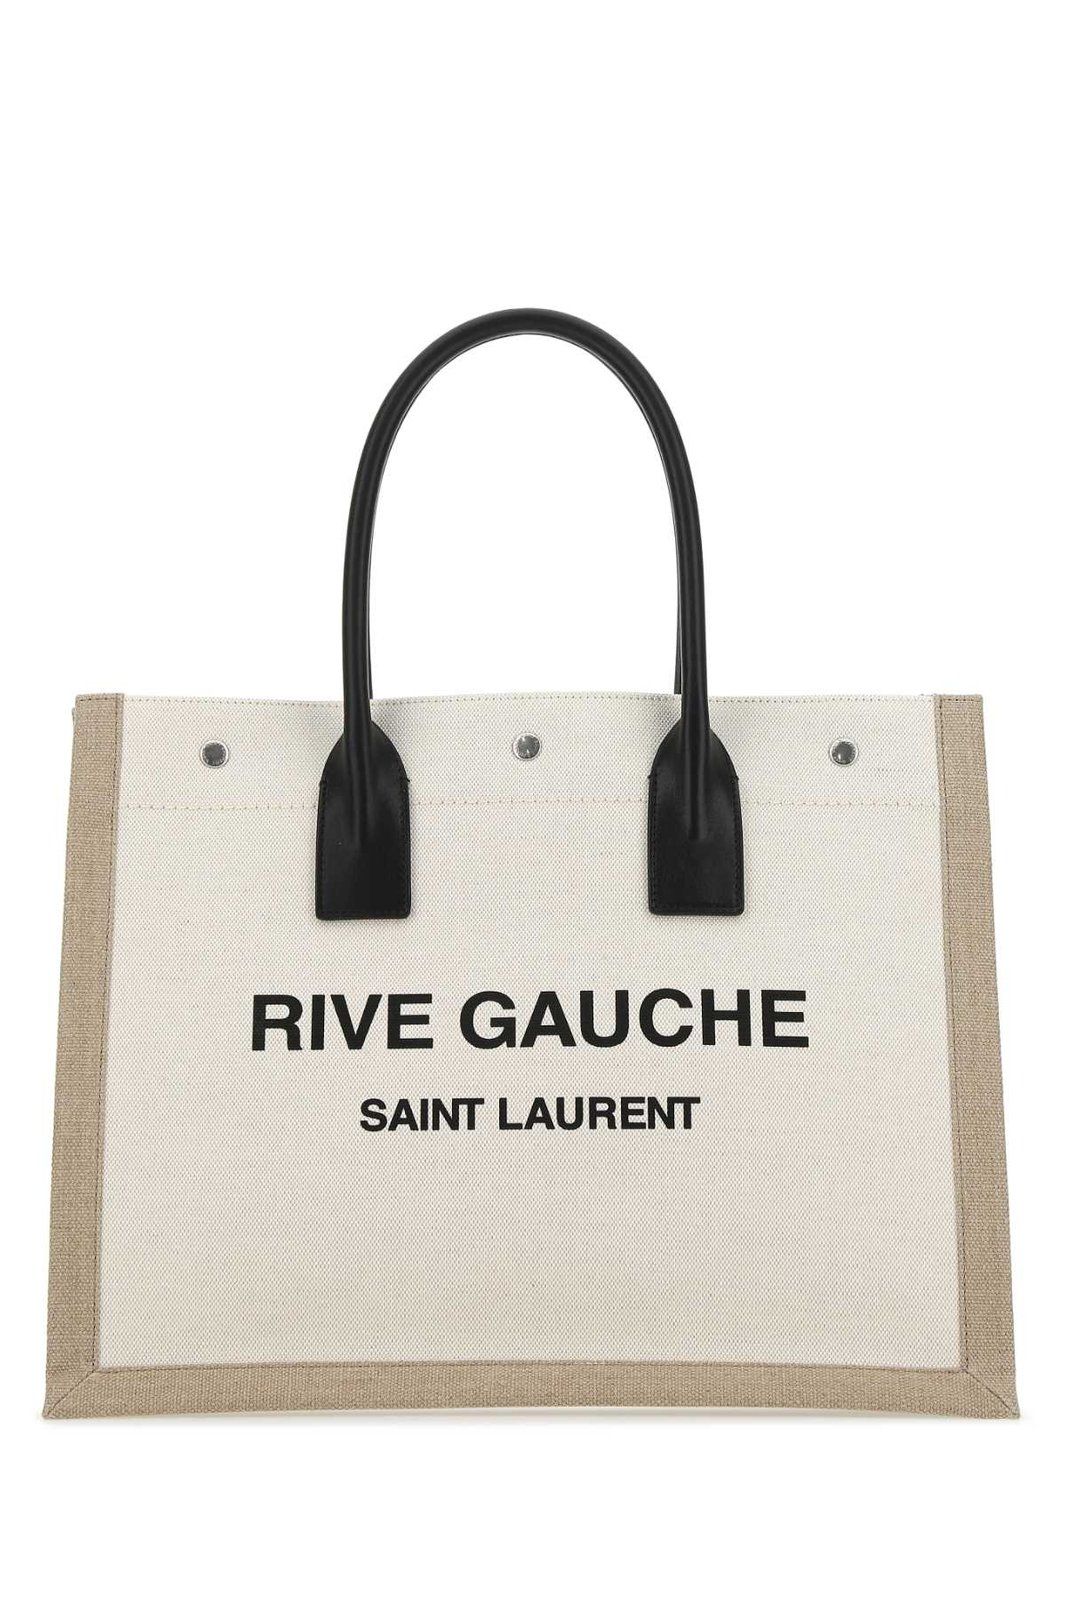 Saint Laurent Rive Gauche Small Tote Bag | Cettire Global